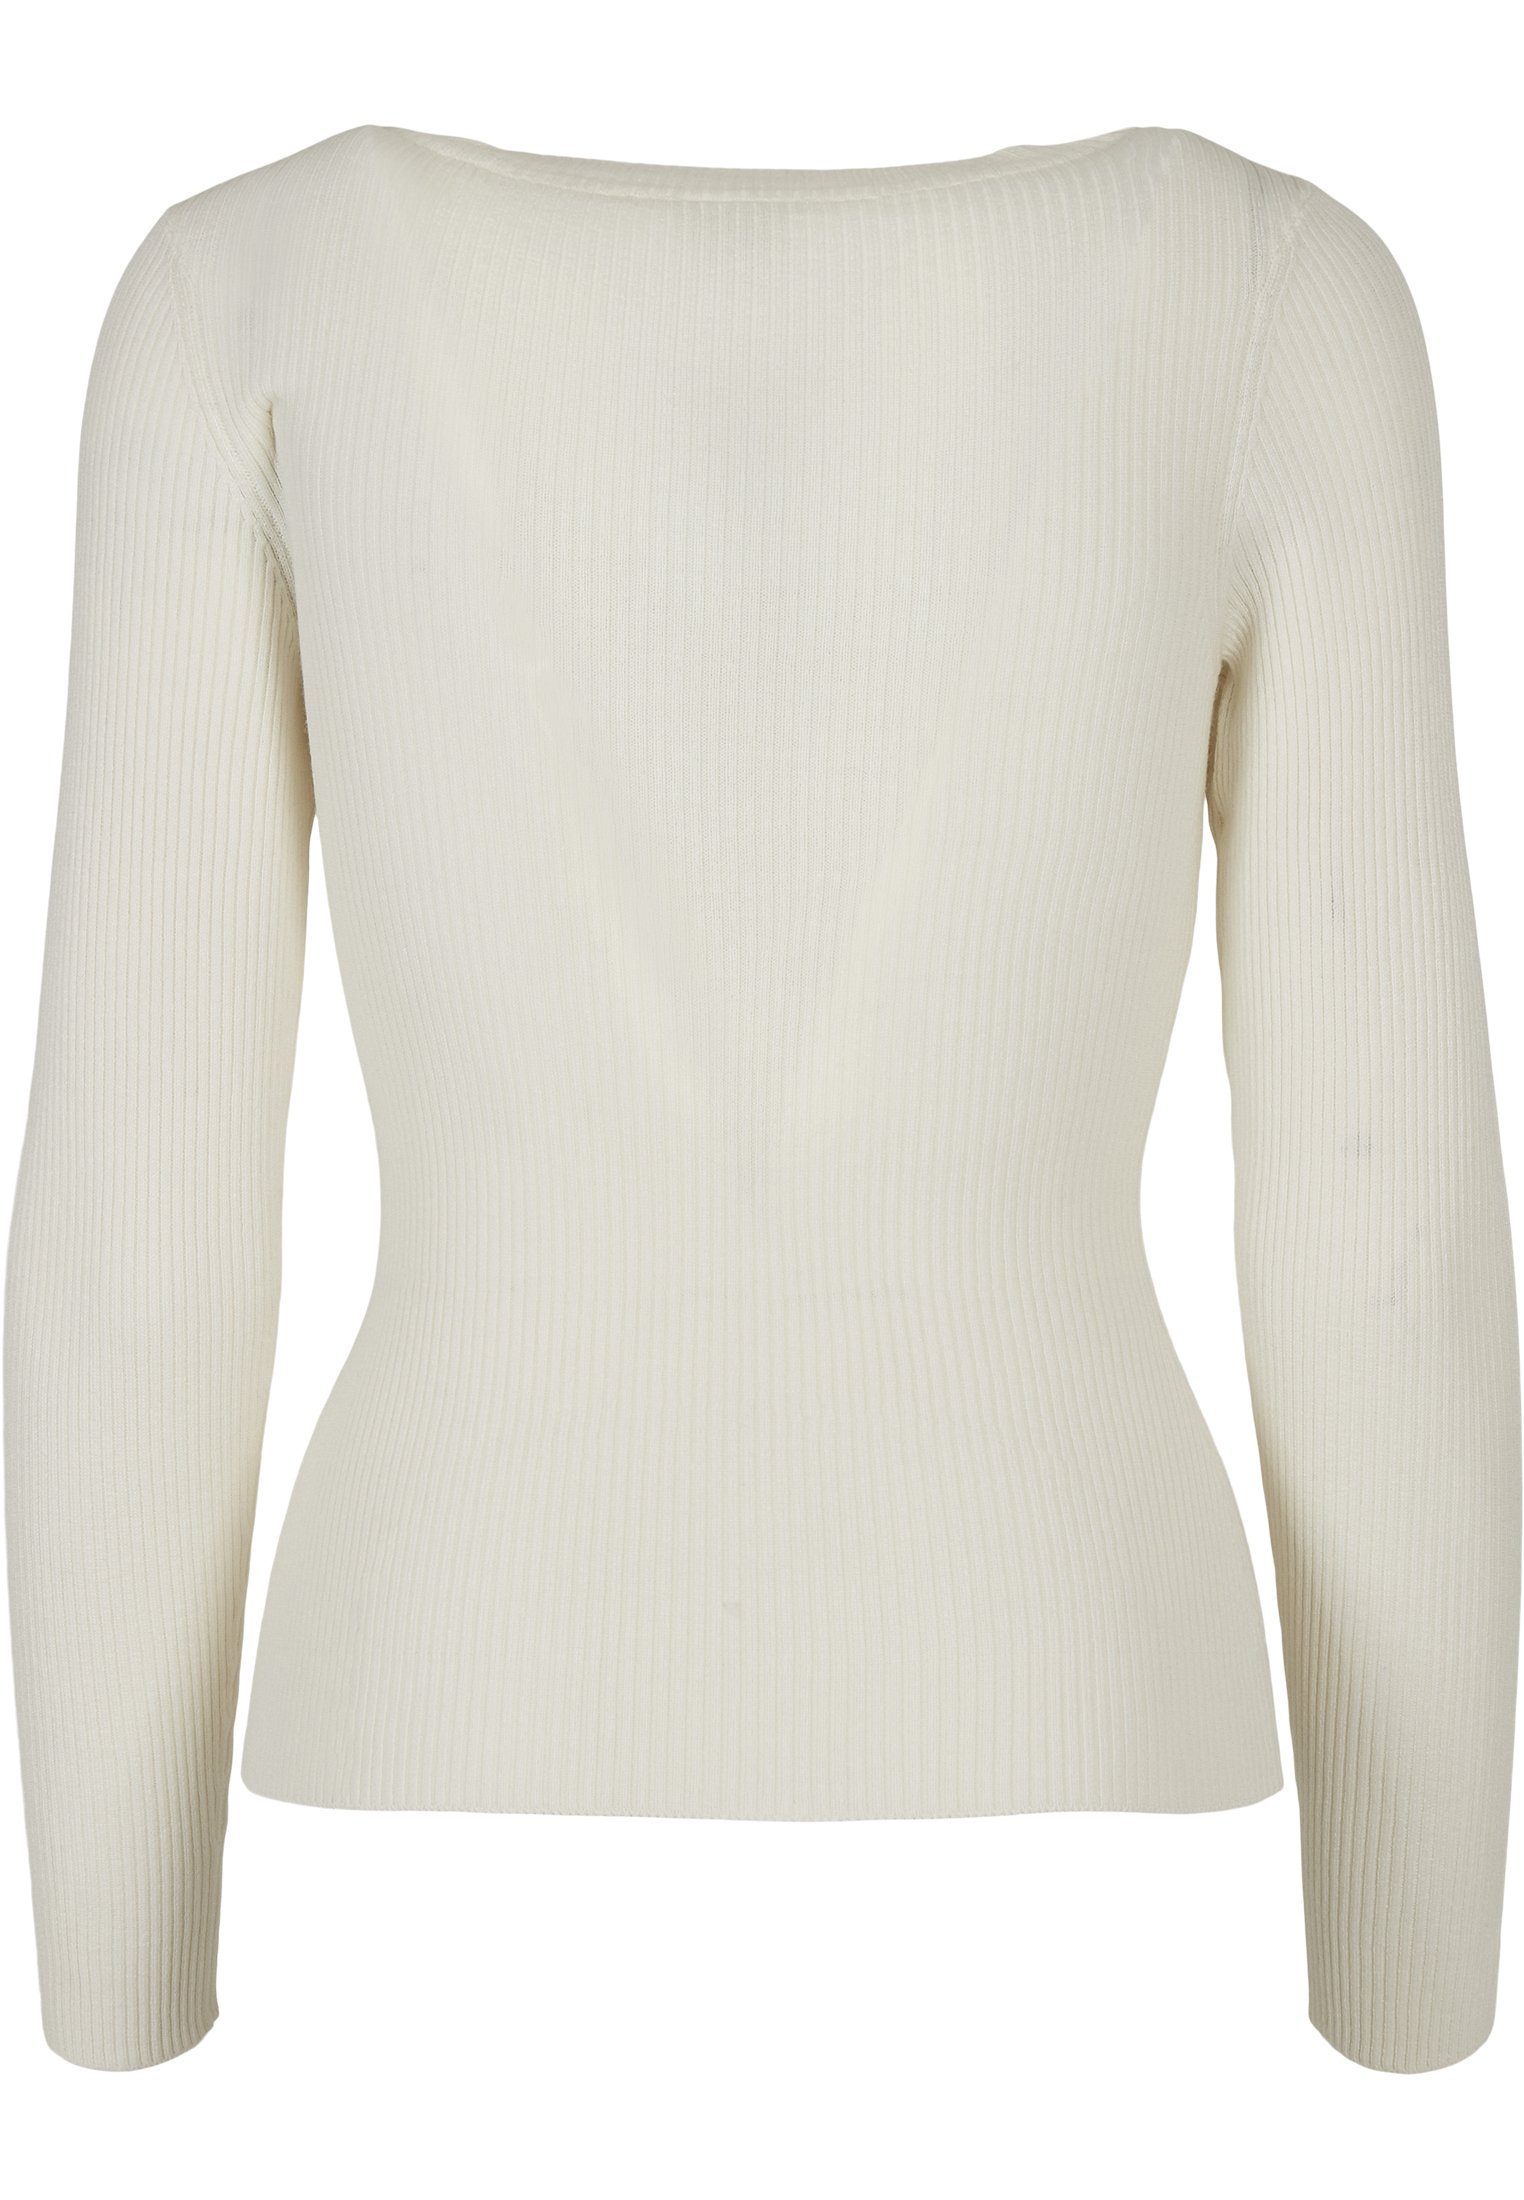 URBAN CLASSICS Kapuzenpullover Damen whitesand Sweater Ladies Neckline (1-tlg) Wide